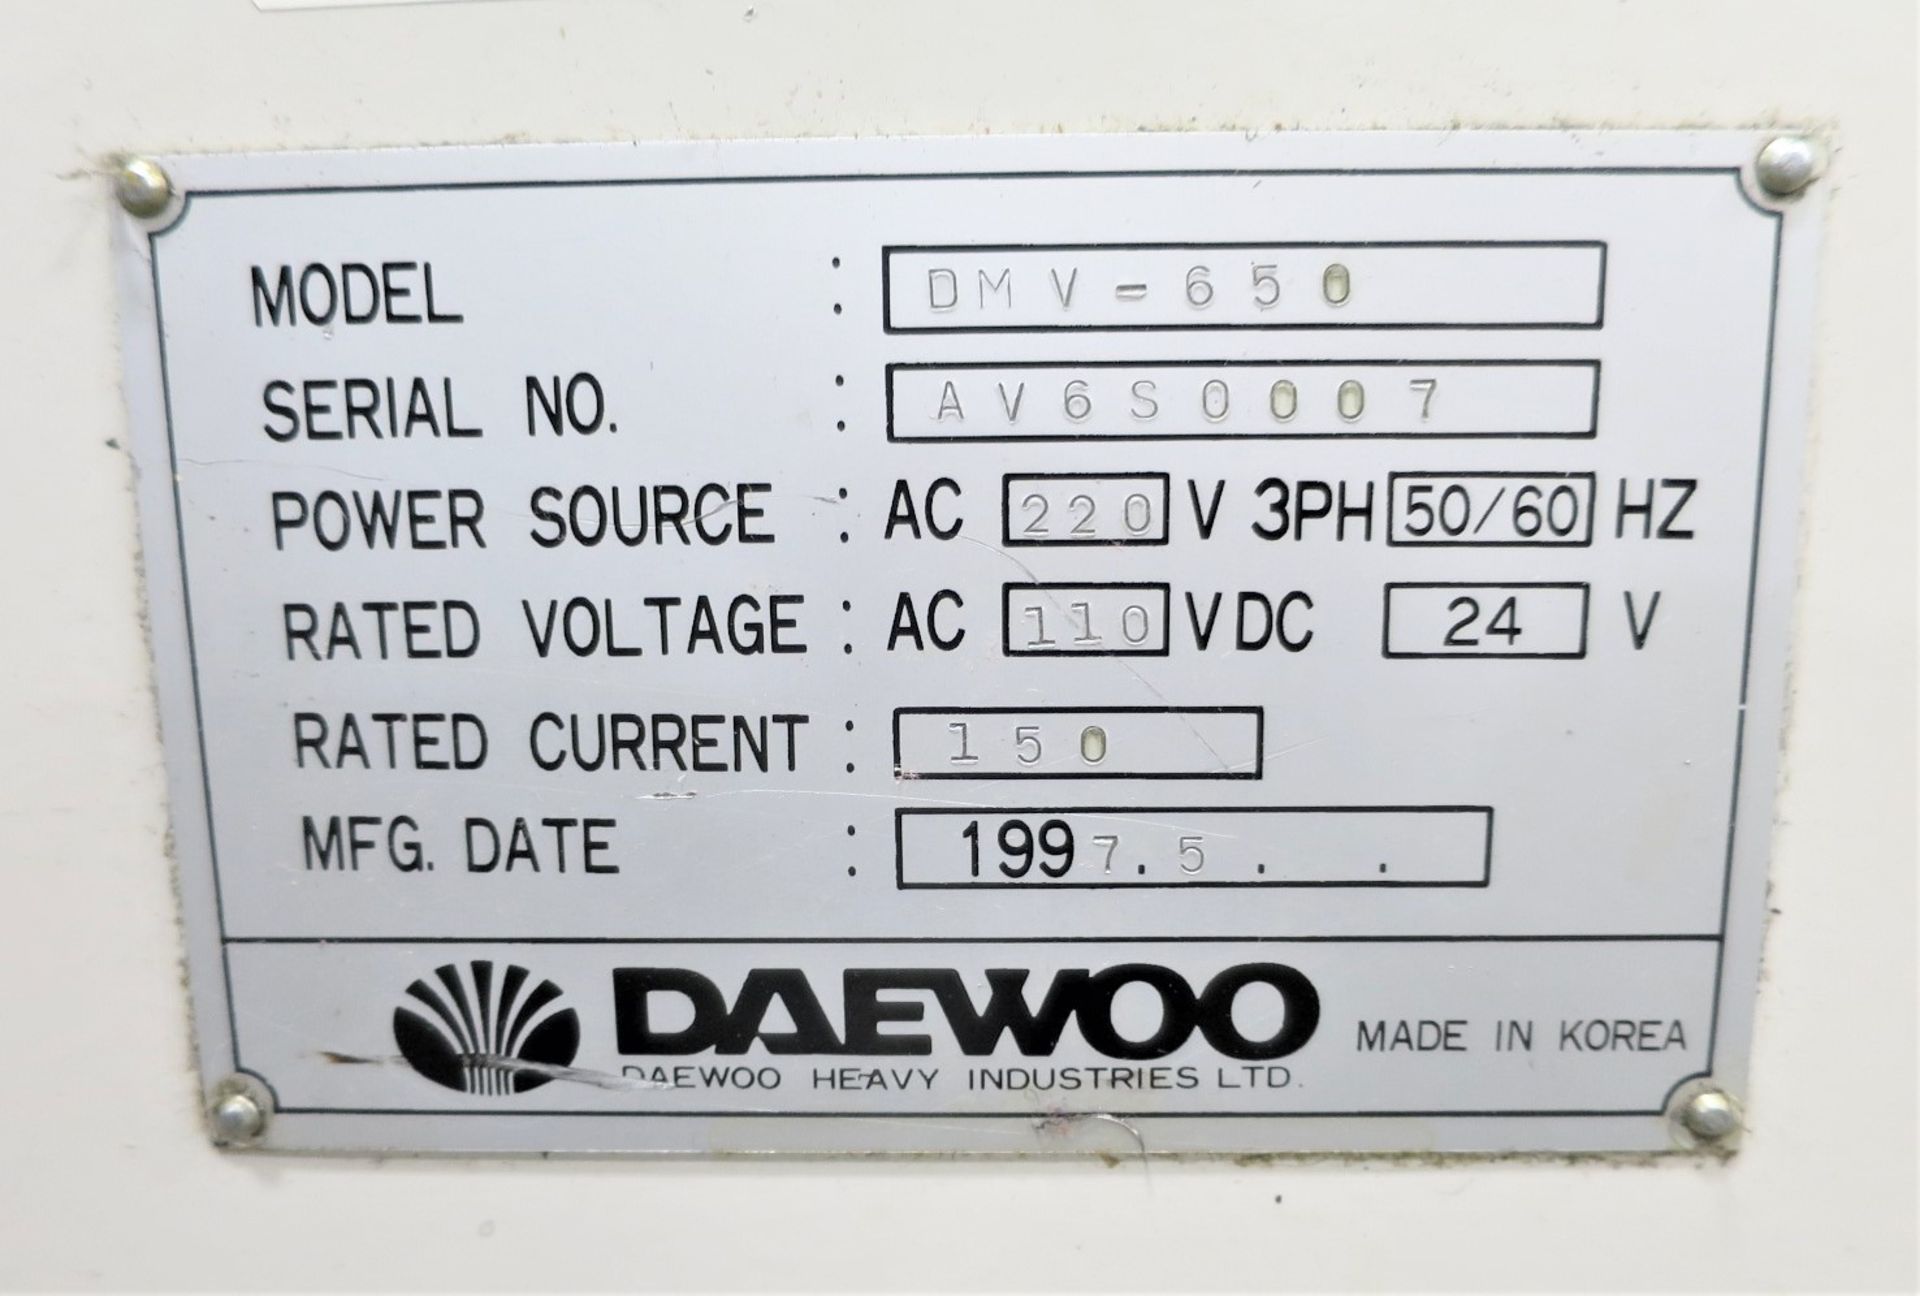 Daewoo DMV-650 3-Axis 50 Taper CNC Vertical Machining Center, S/N AV6S0007, New 1997 - Image 10 of 12